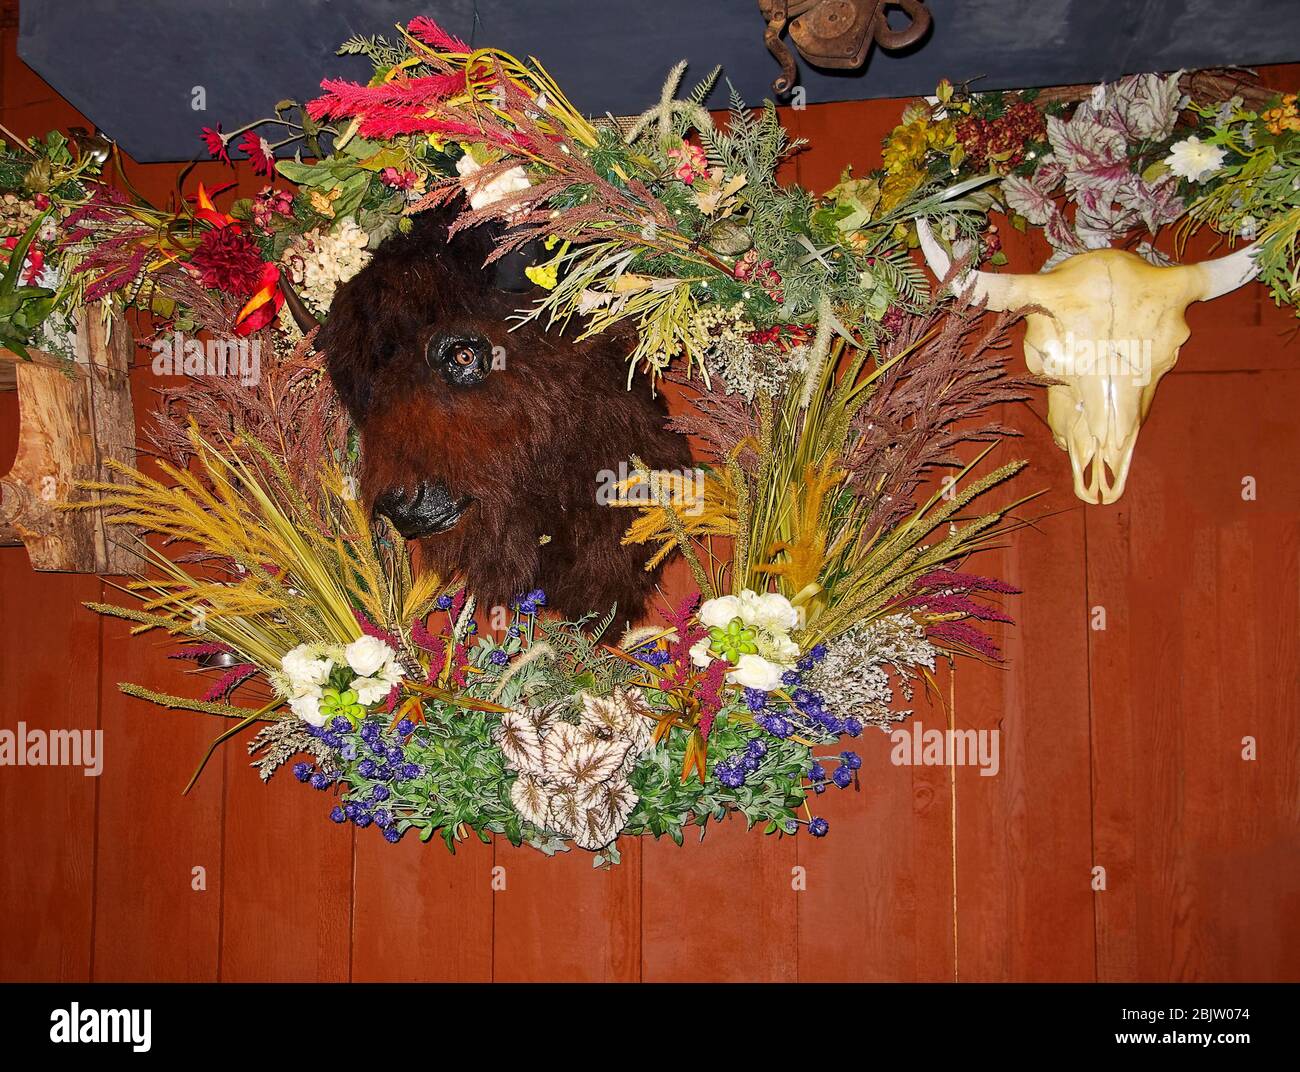 eclectic wall decorations, artificial wreath around stuffed animal head,  animal skull, wood paneling, rustic, PR Stock Photo - Alamy